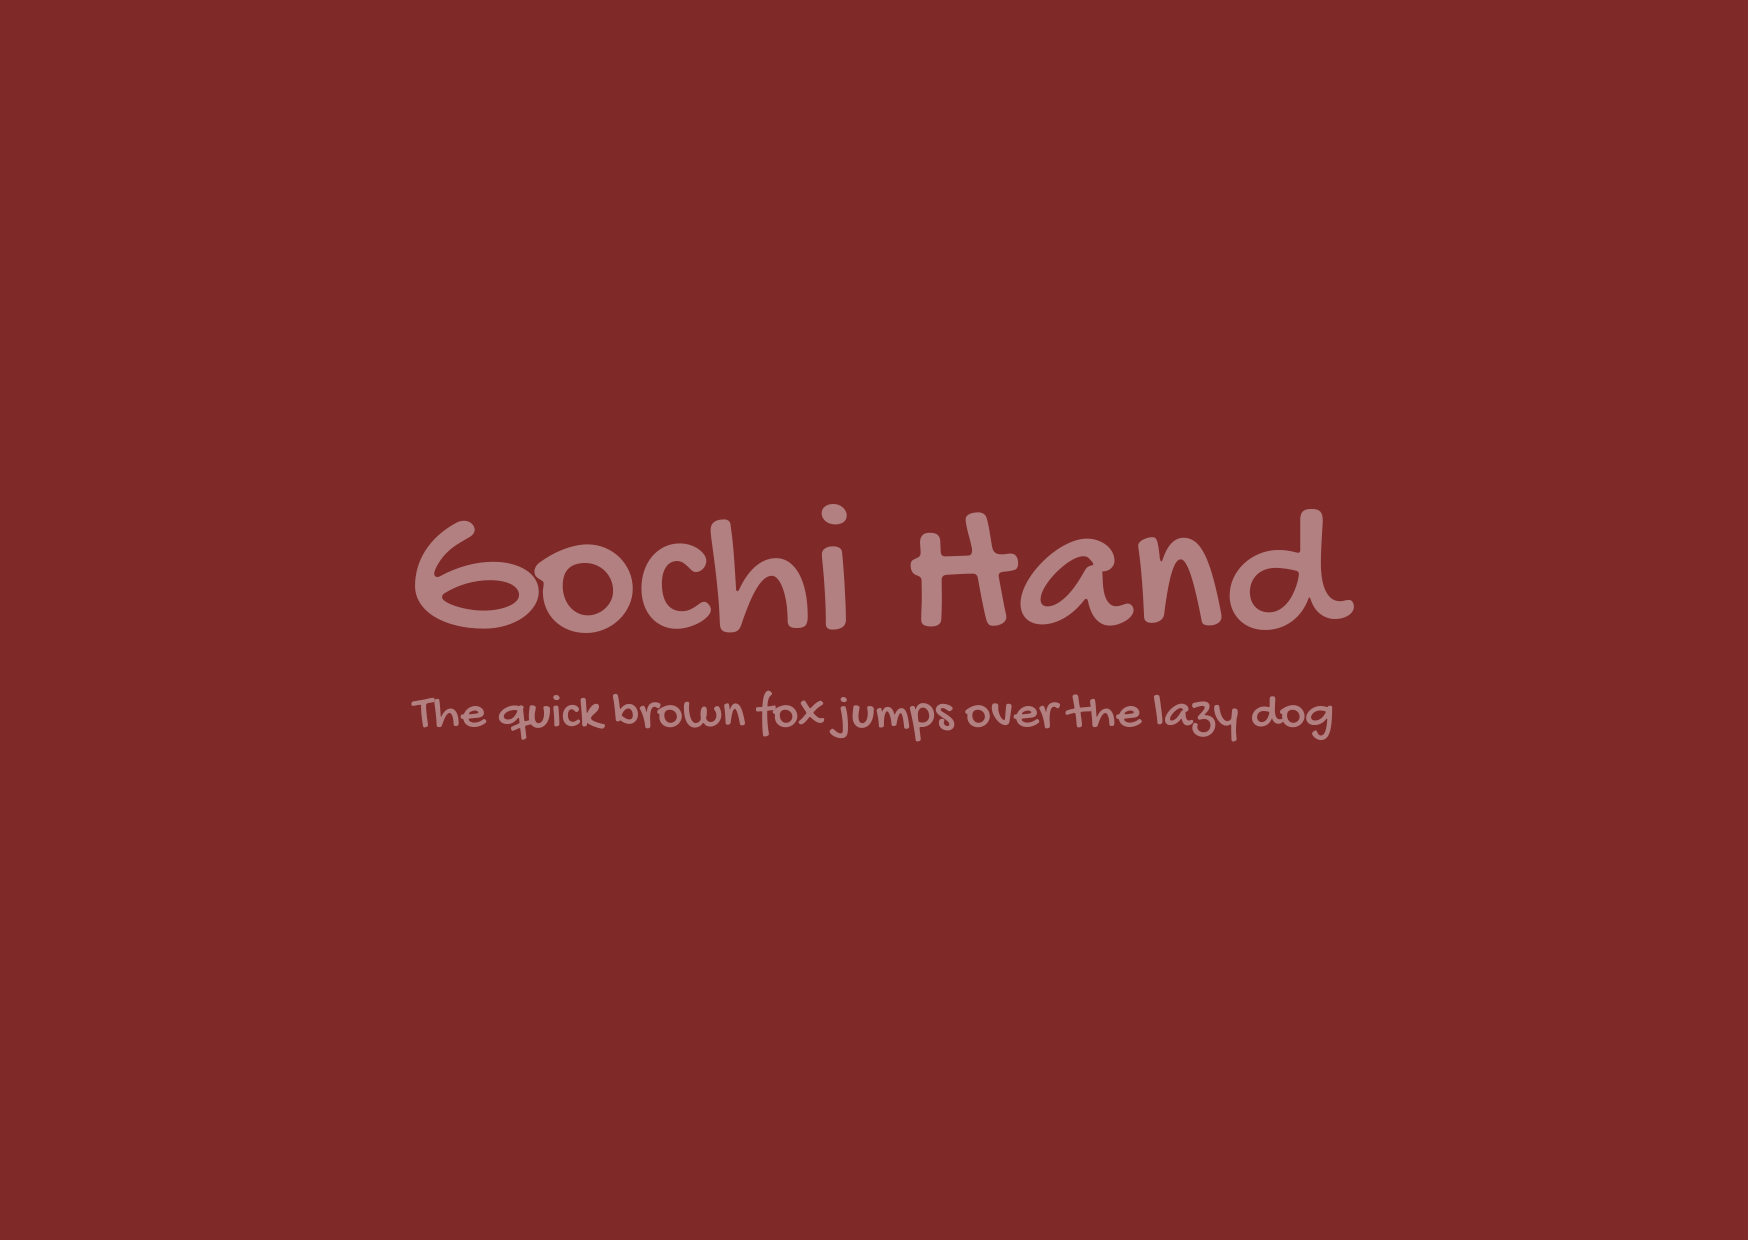 Blogduwebdesign police manuscrite gochi hand